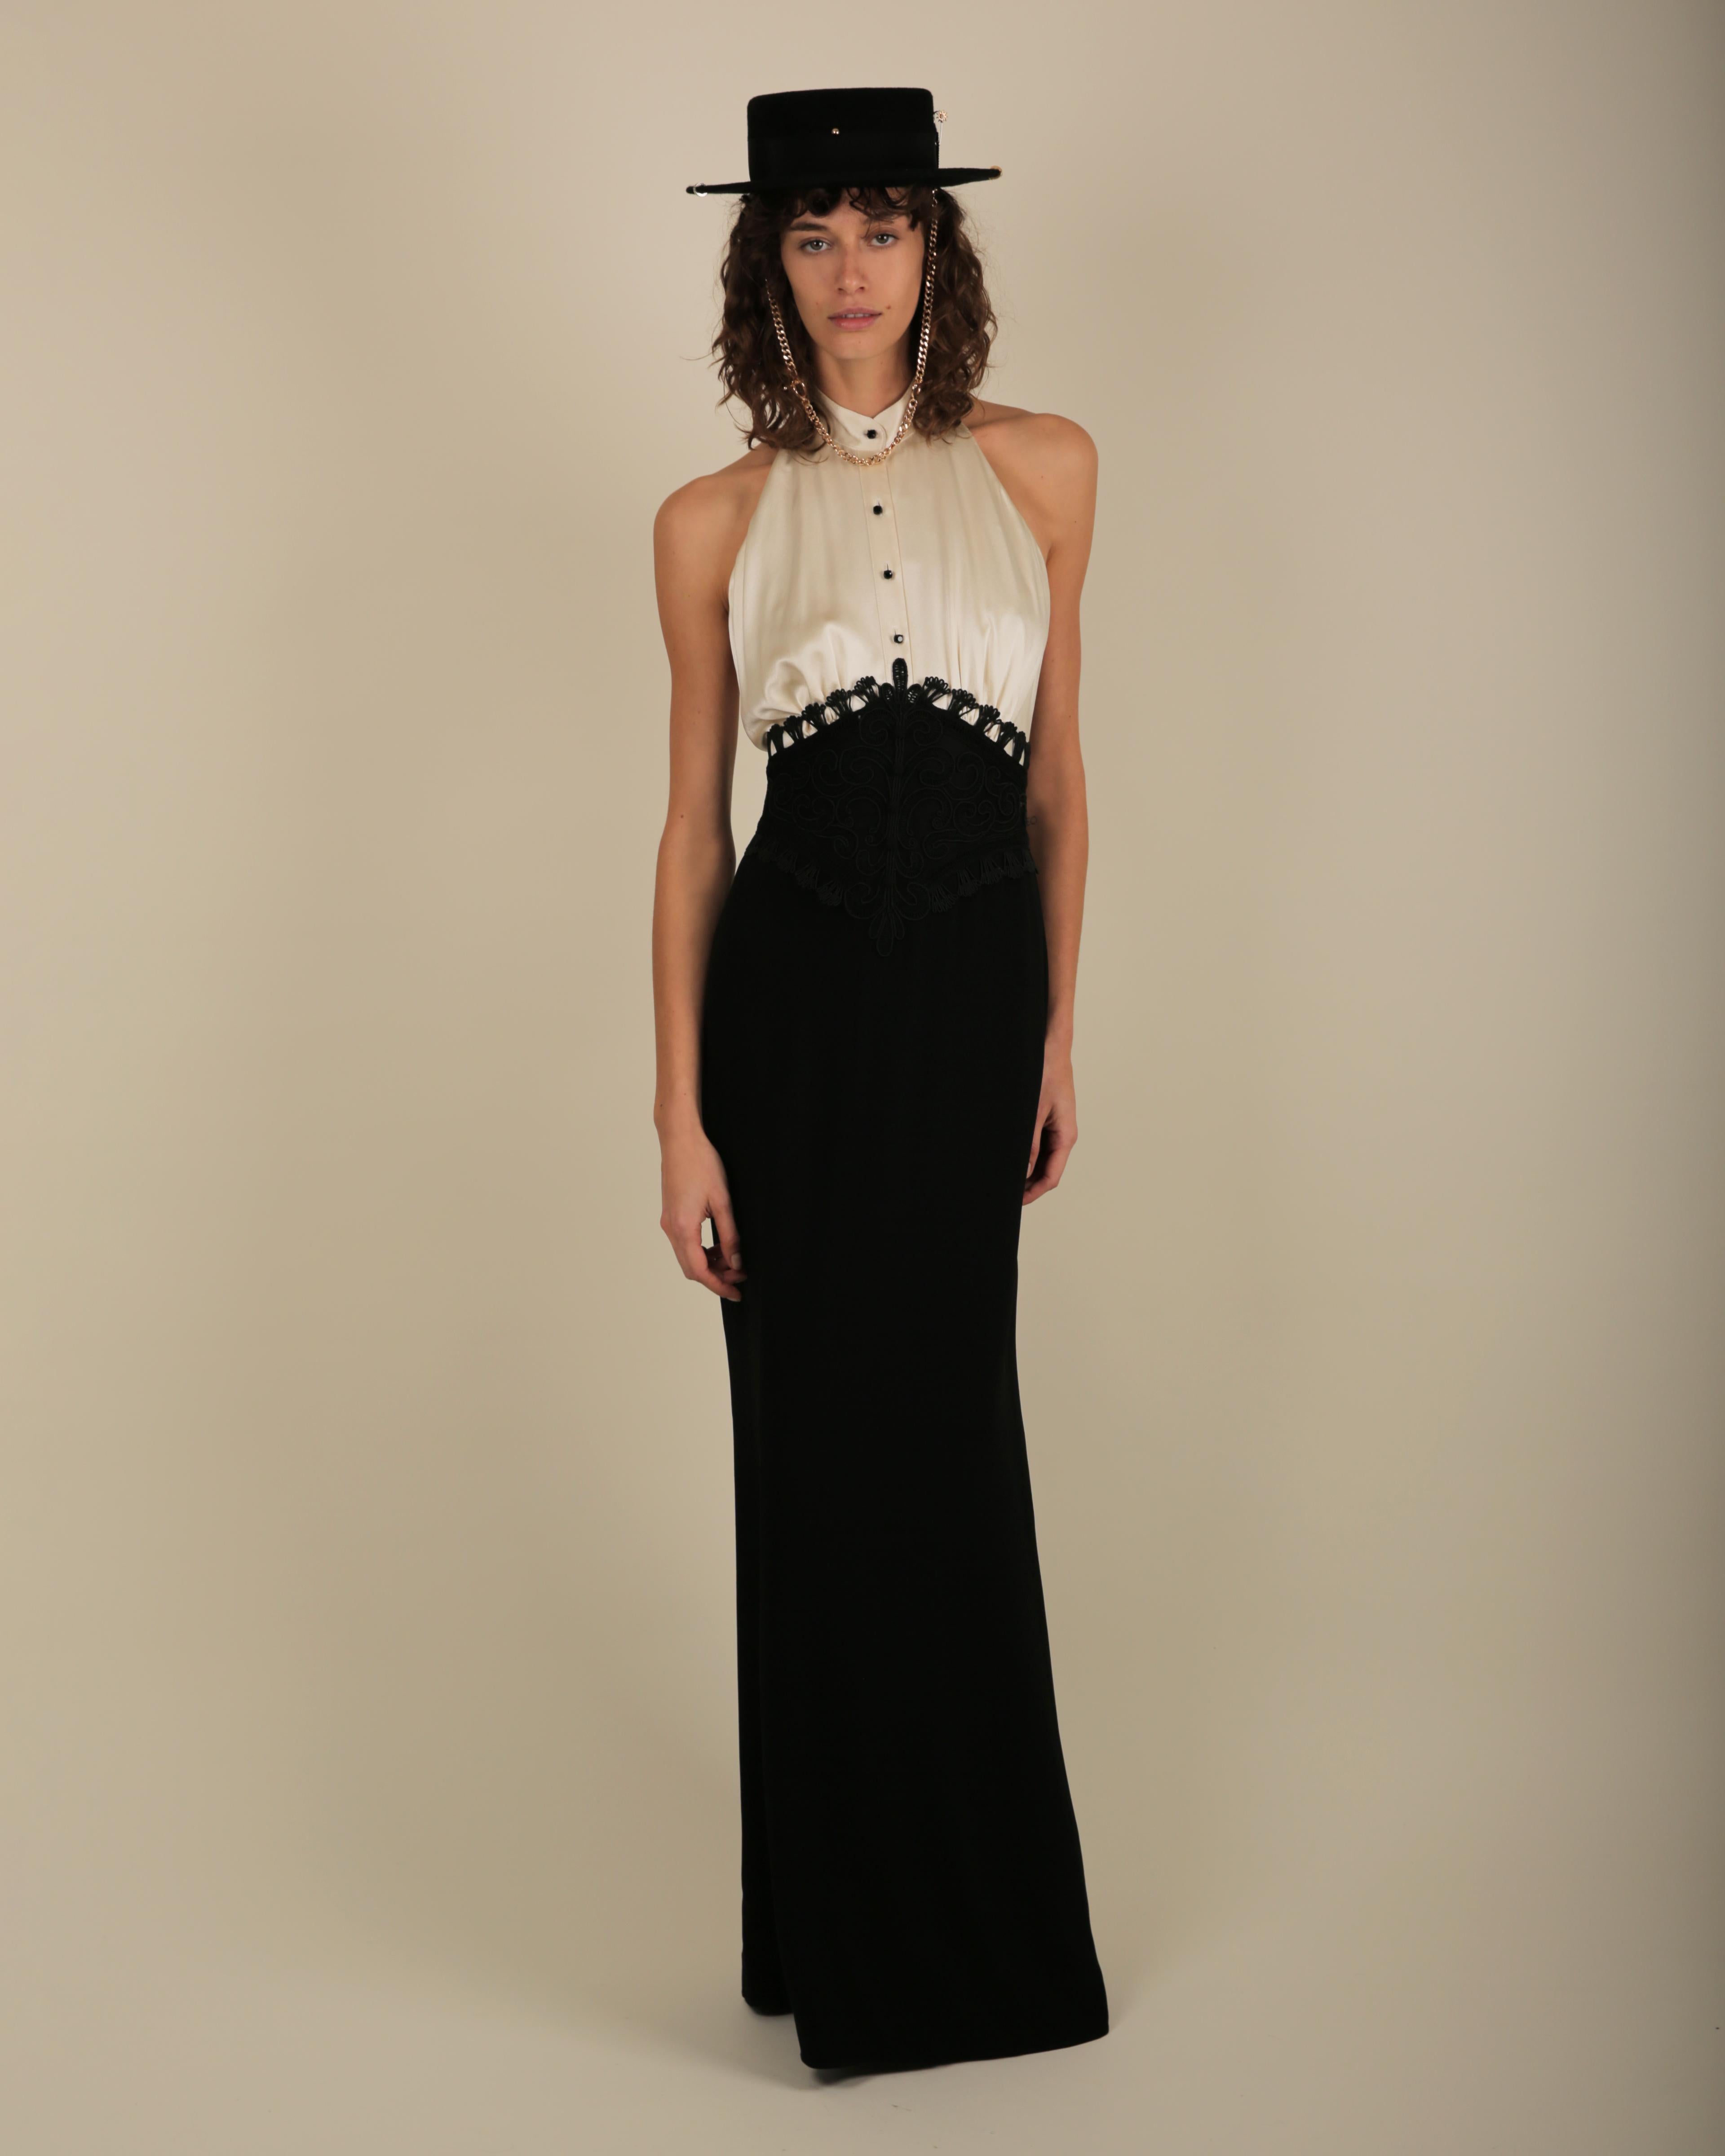 Women's or Men's Ralph Lauren SS 2013 black white sleeveless halter backless button up dress gown For Sale